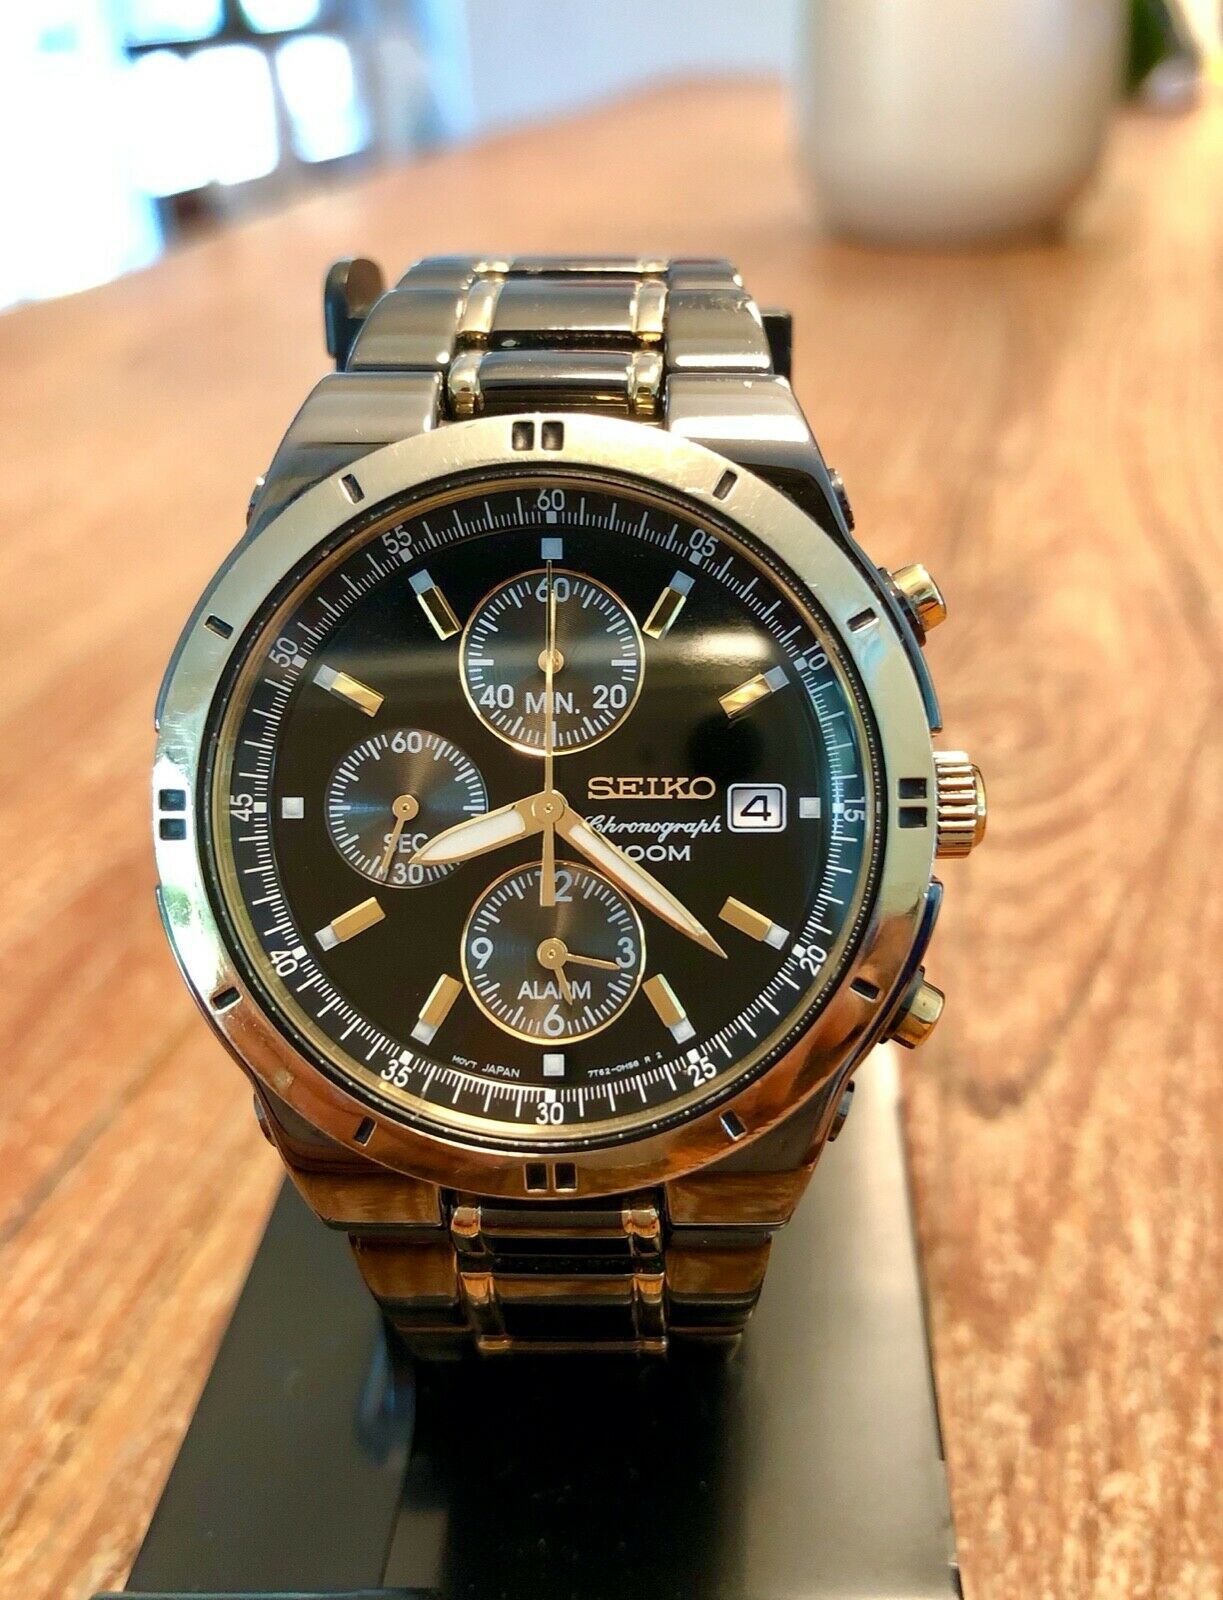 Stunning SEIKO Chronograph Quartz Watch SNAA30 (7T62-0FY0) Black and ...